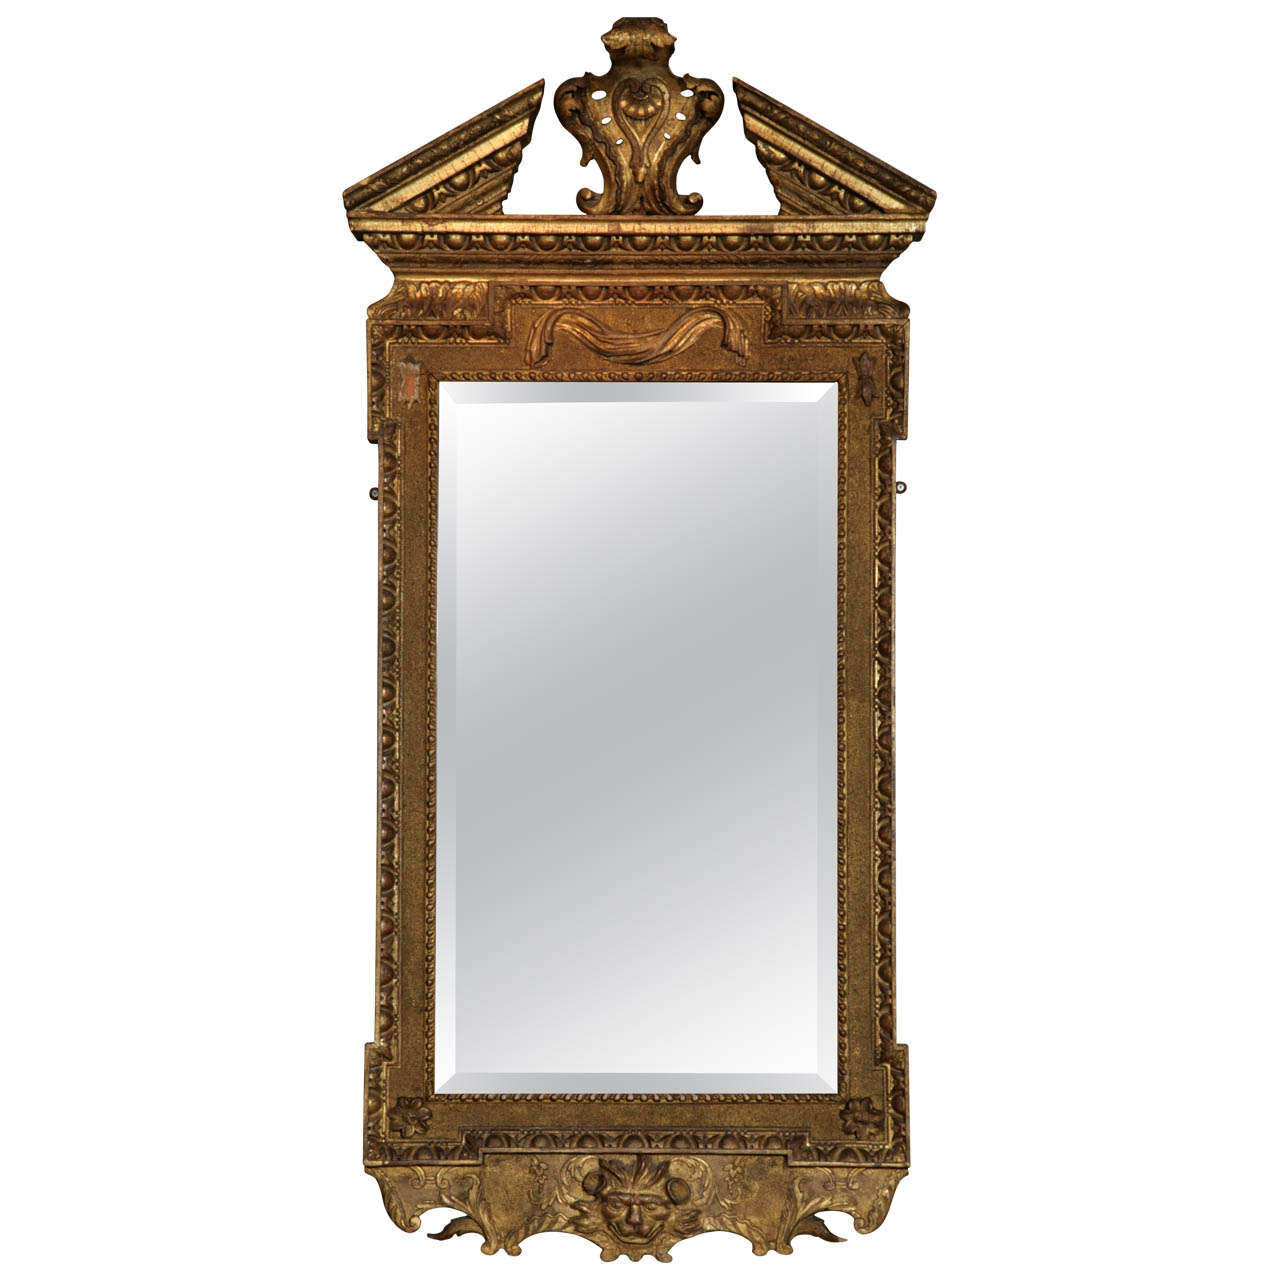 George II.-Pfeilerspiegel aus vergoldetem Holz